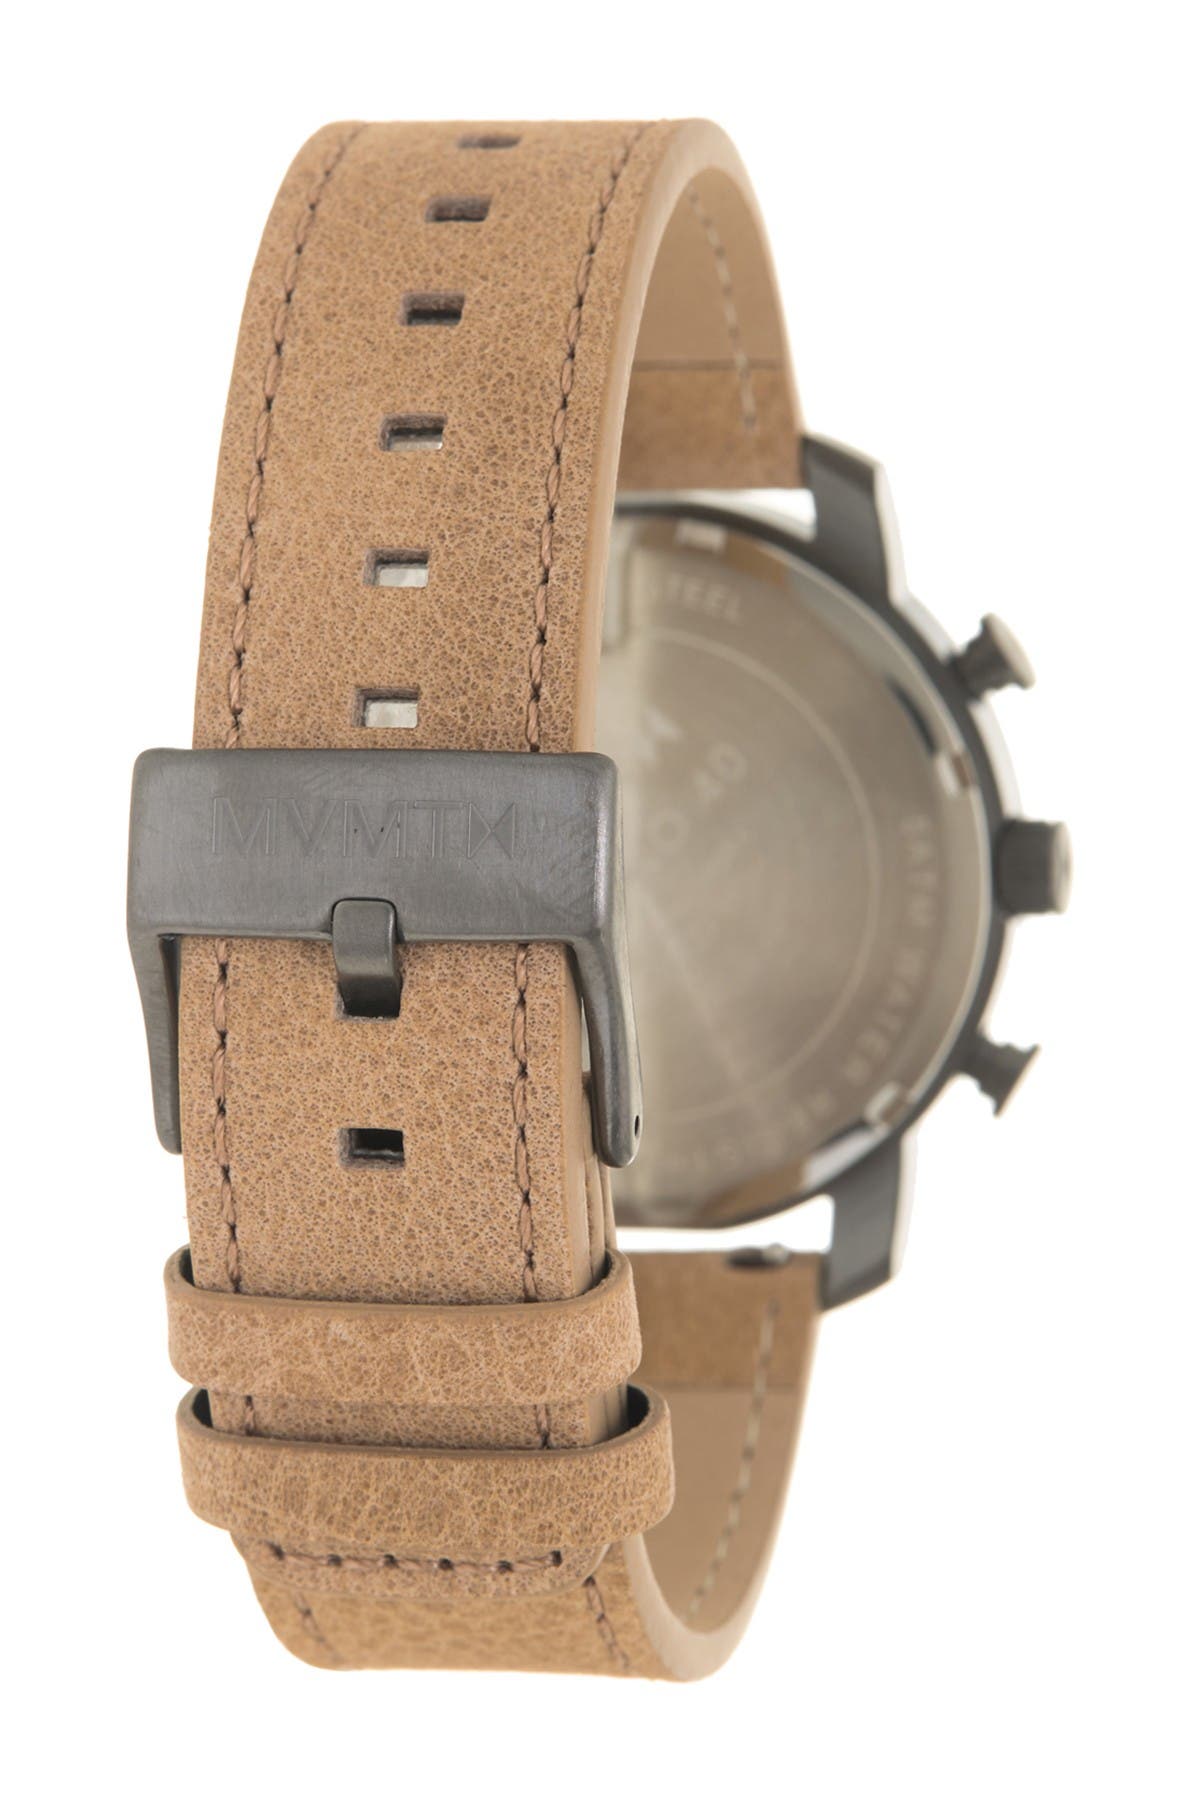 Mvmt Men's Chrono Leather Strap Watch In Grey